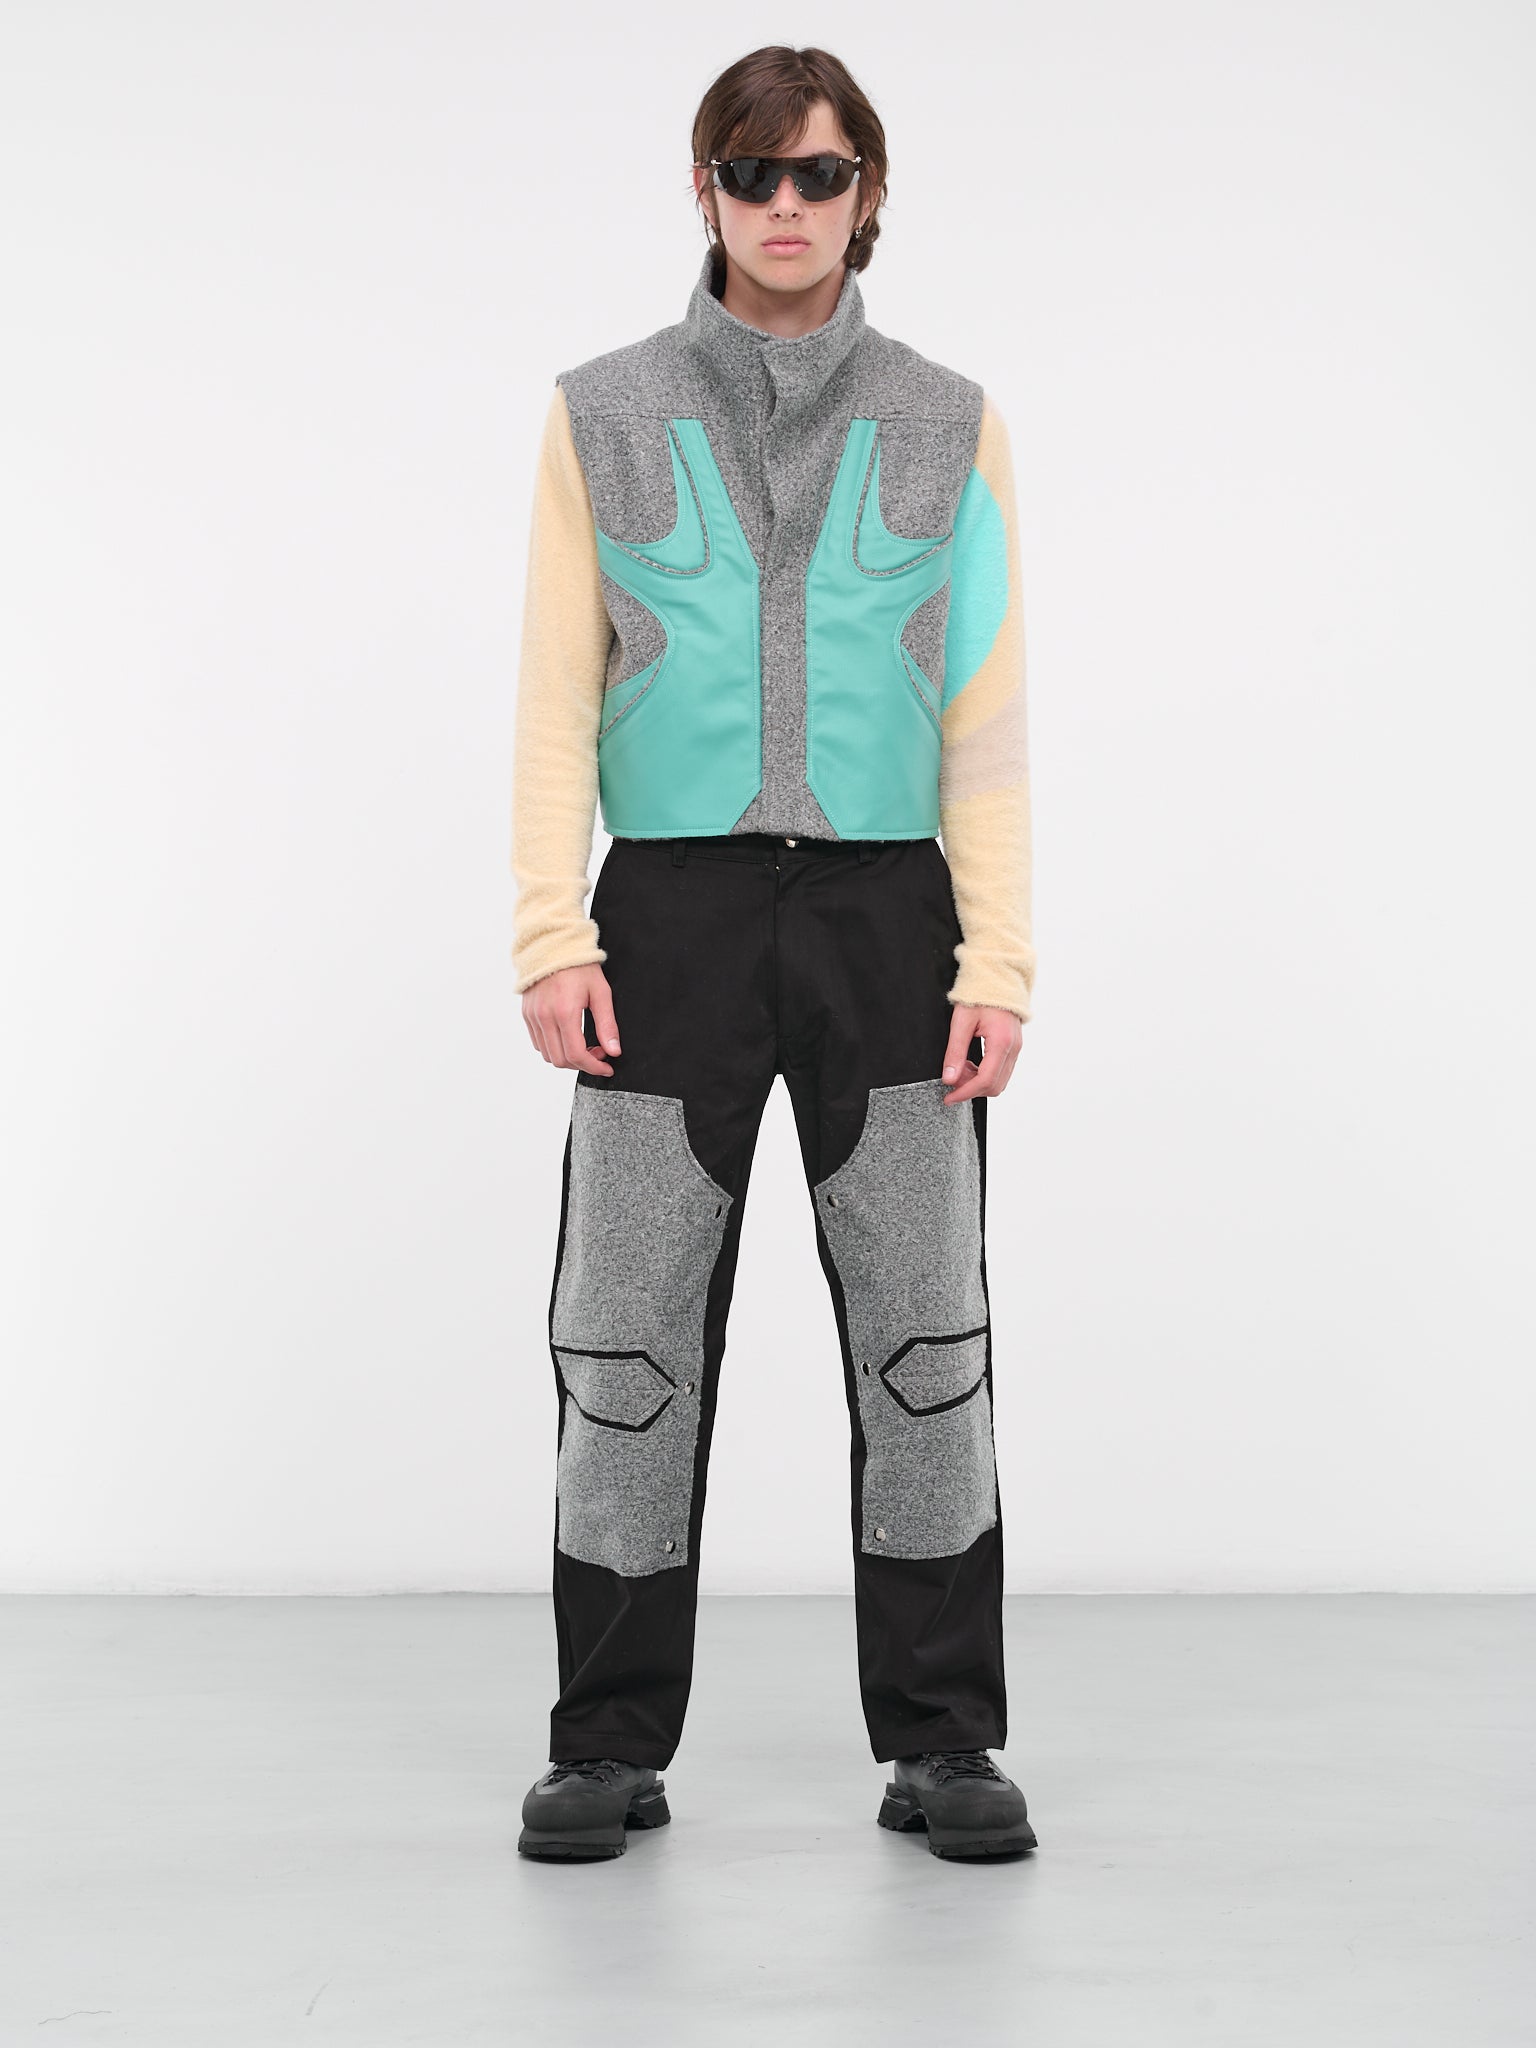 Patched Vest (SJV02G-BOXY-GREY-TURQUOISE-GRE)